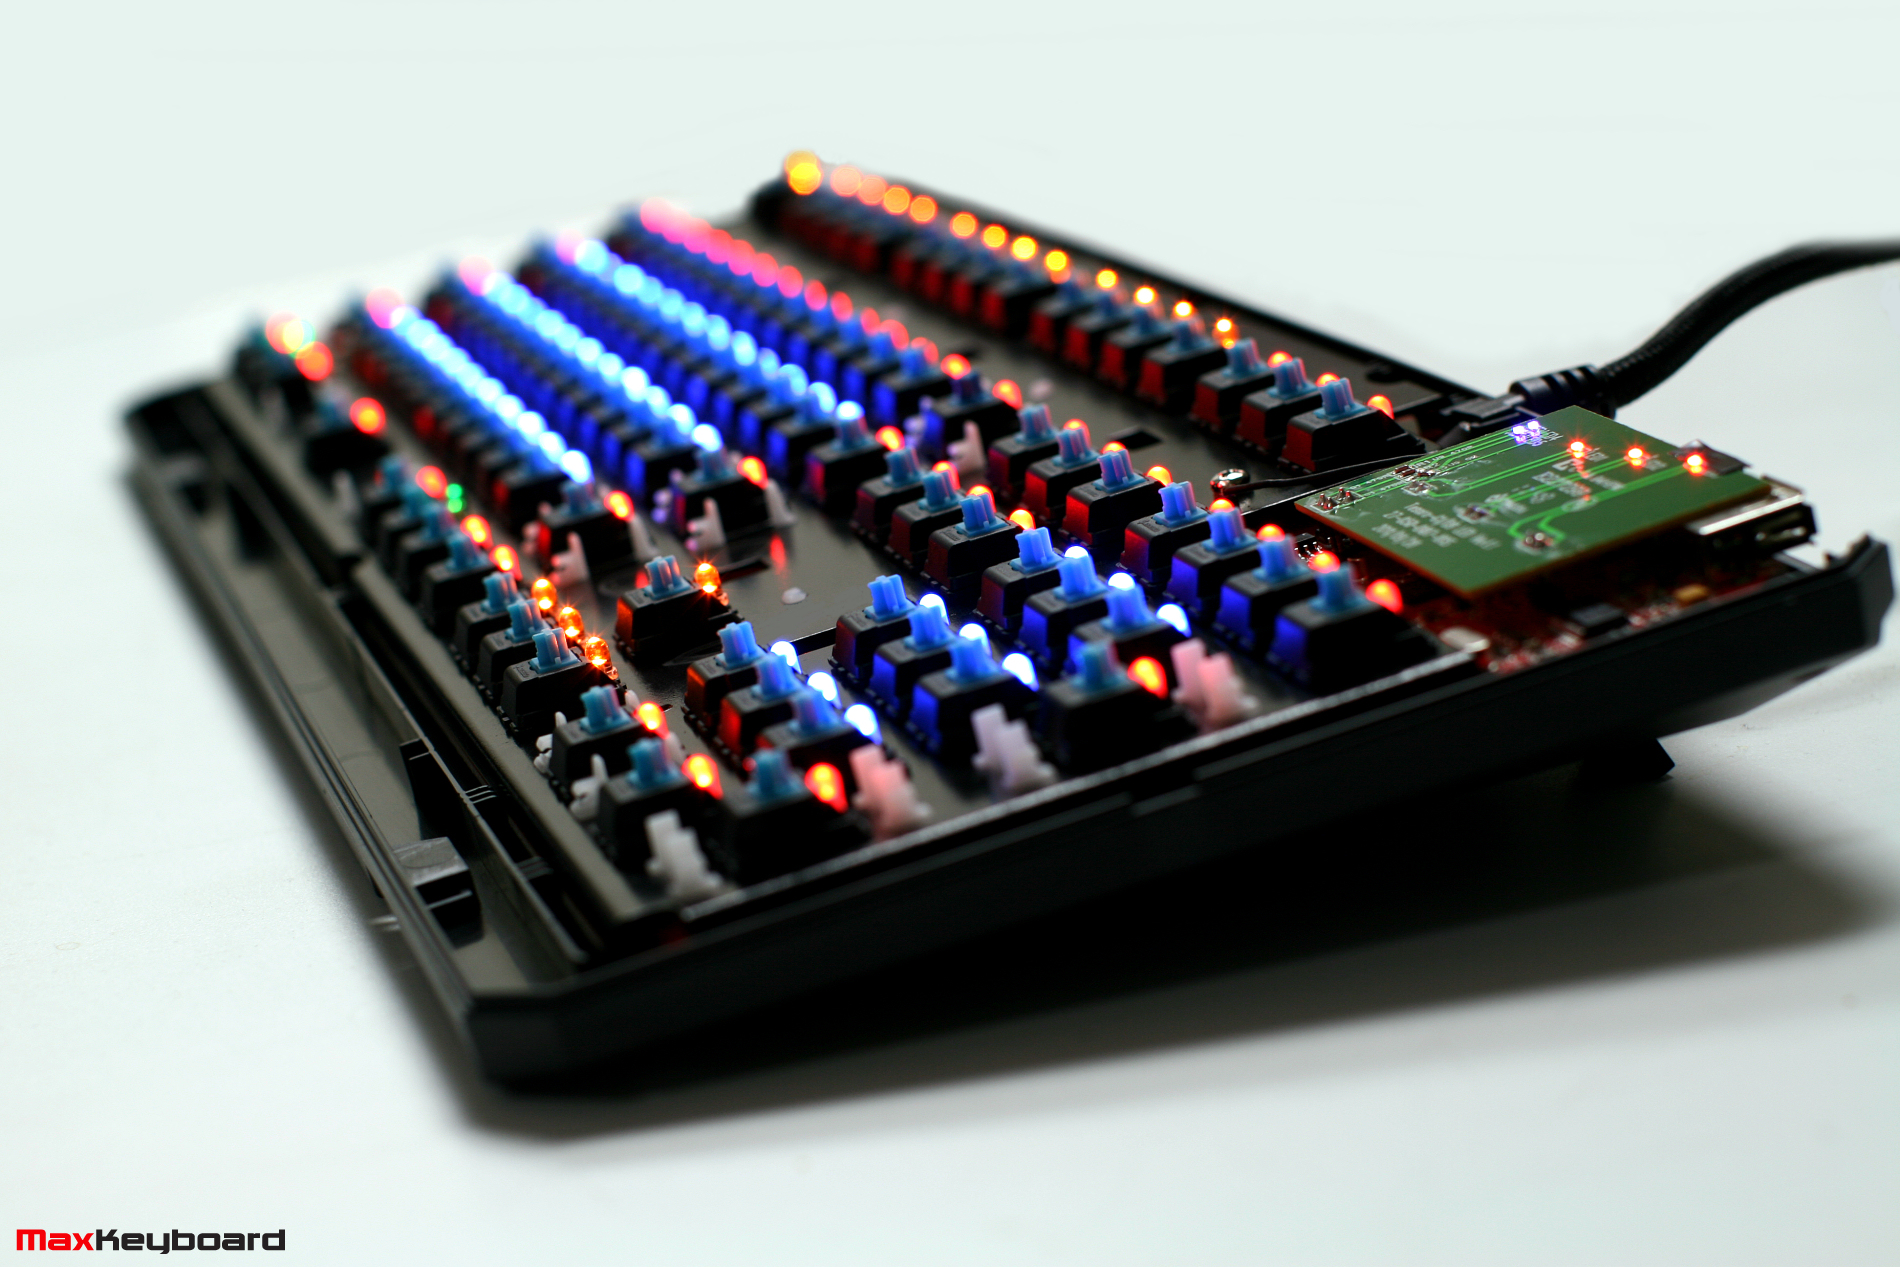 Max Keyboard Best Custom Backlit Mechanical Keyboard Image Gallery